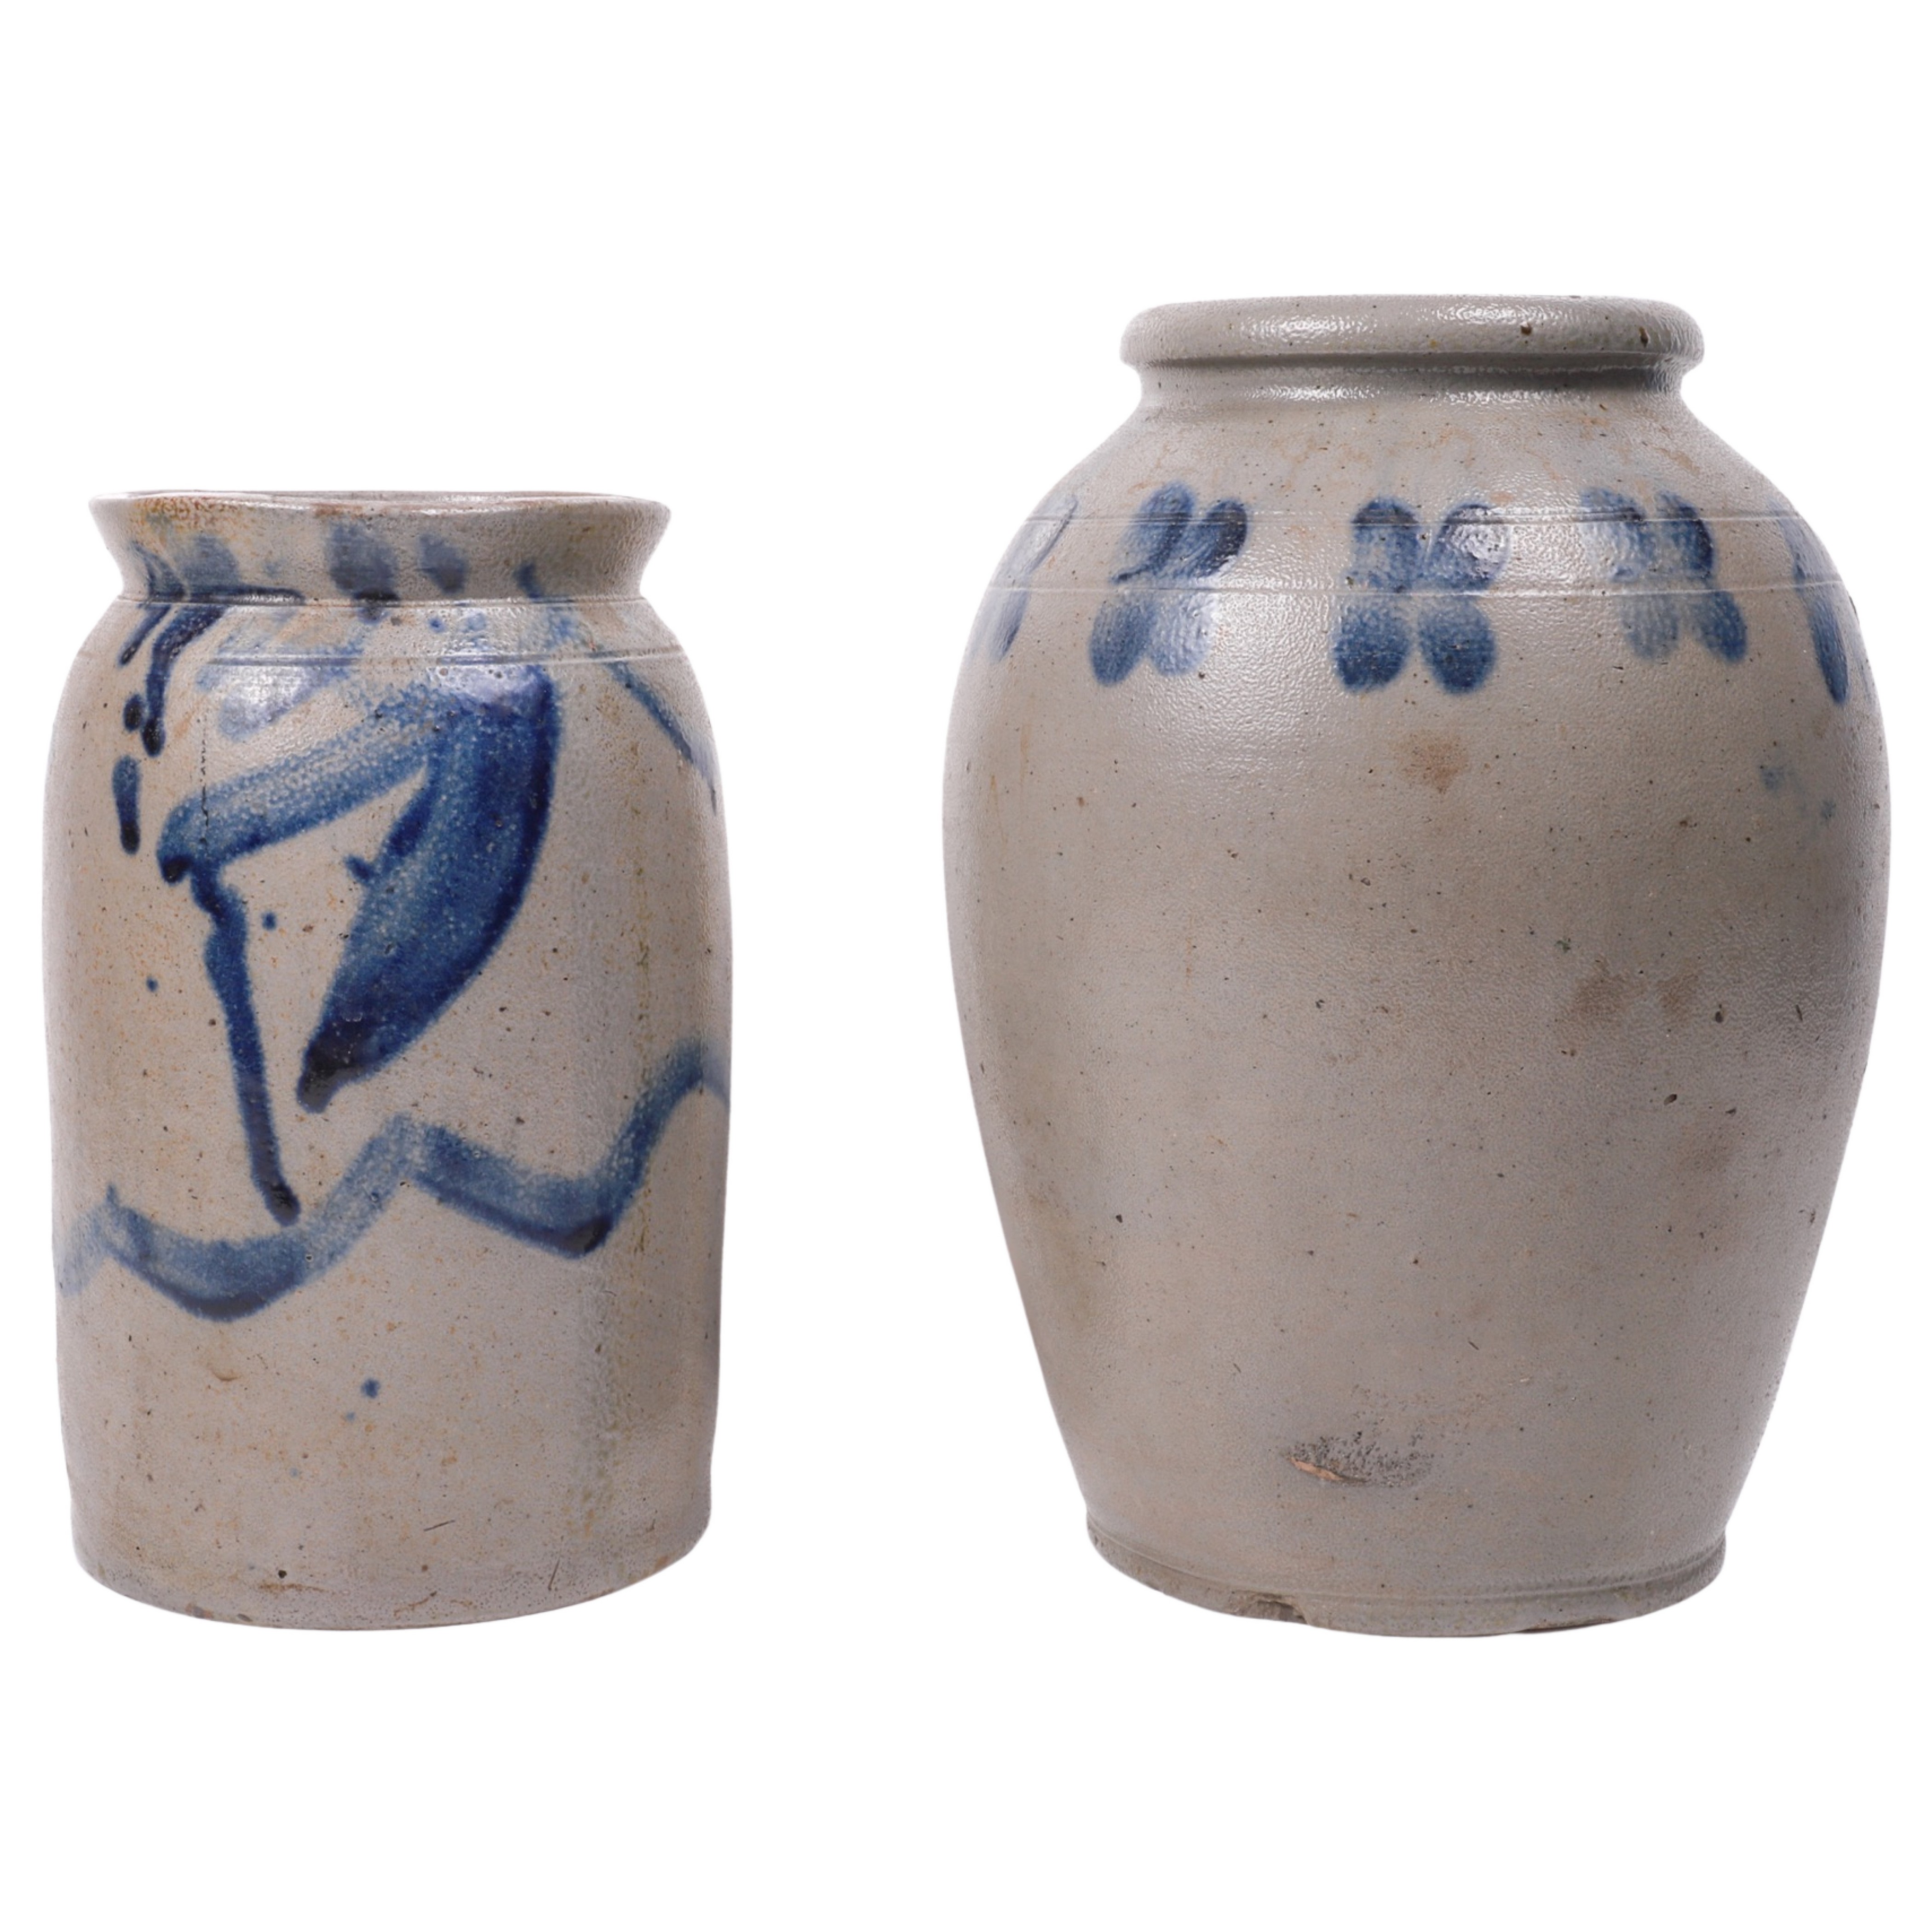  2 Blue decorated stoneware jars  3b46ca